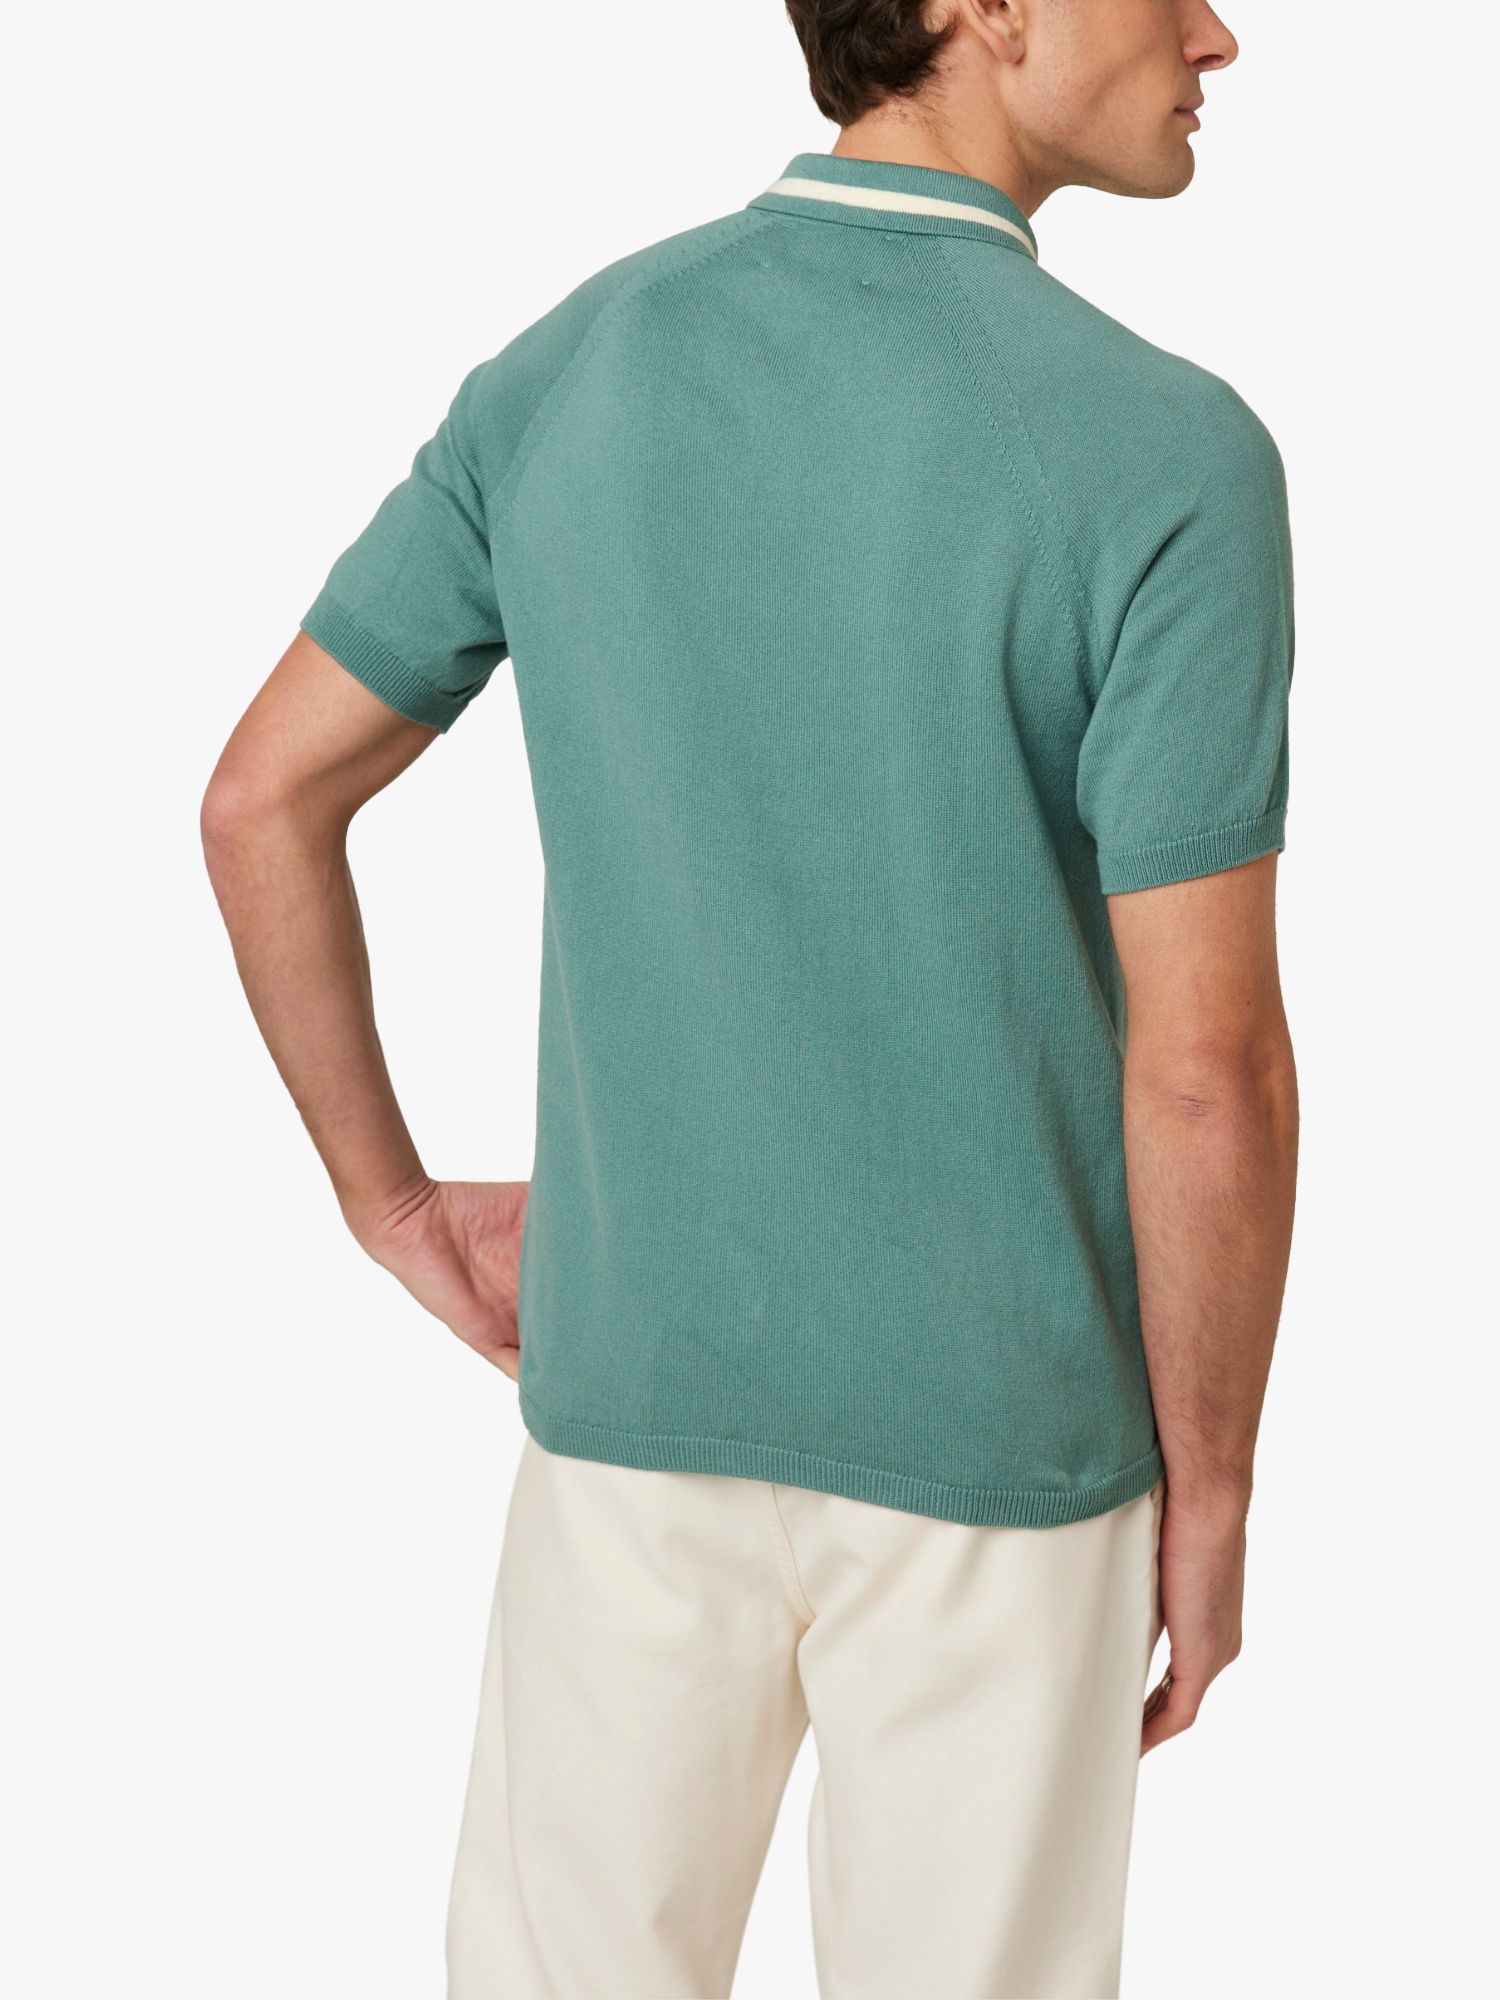 Peregrine Textured Polo Shirt, Green, M